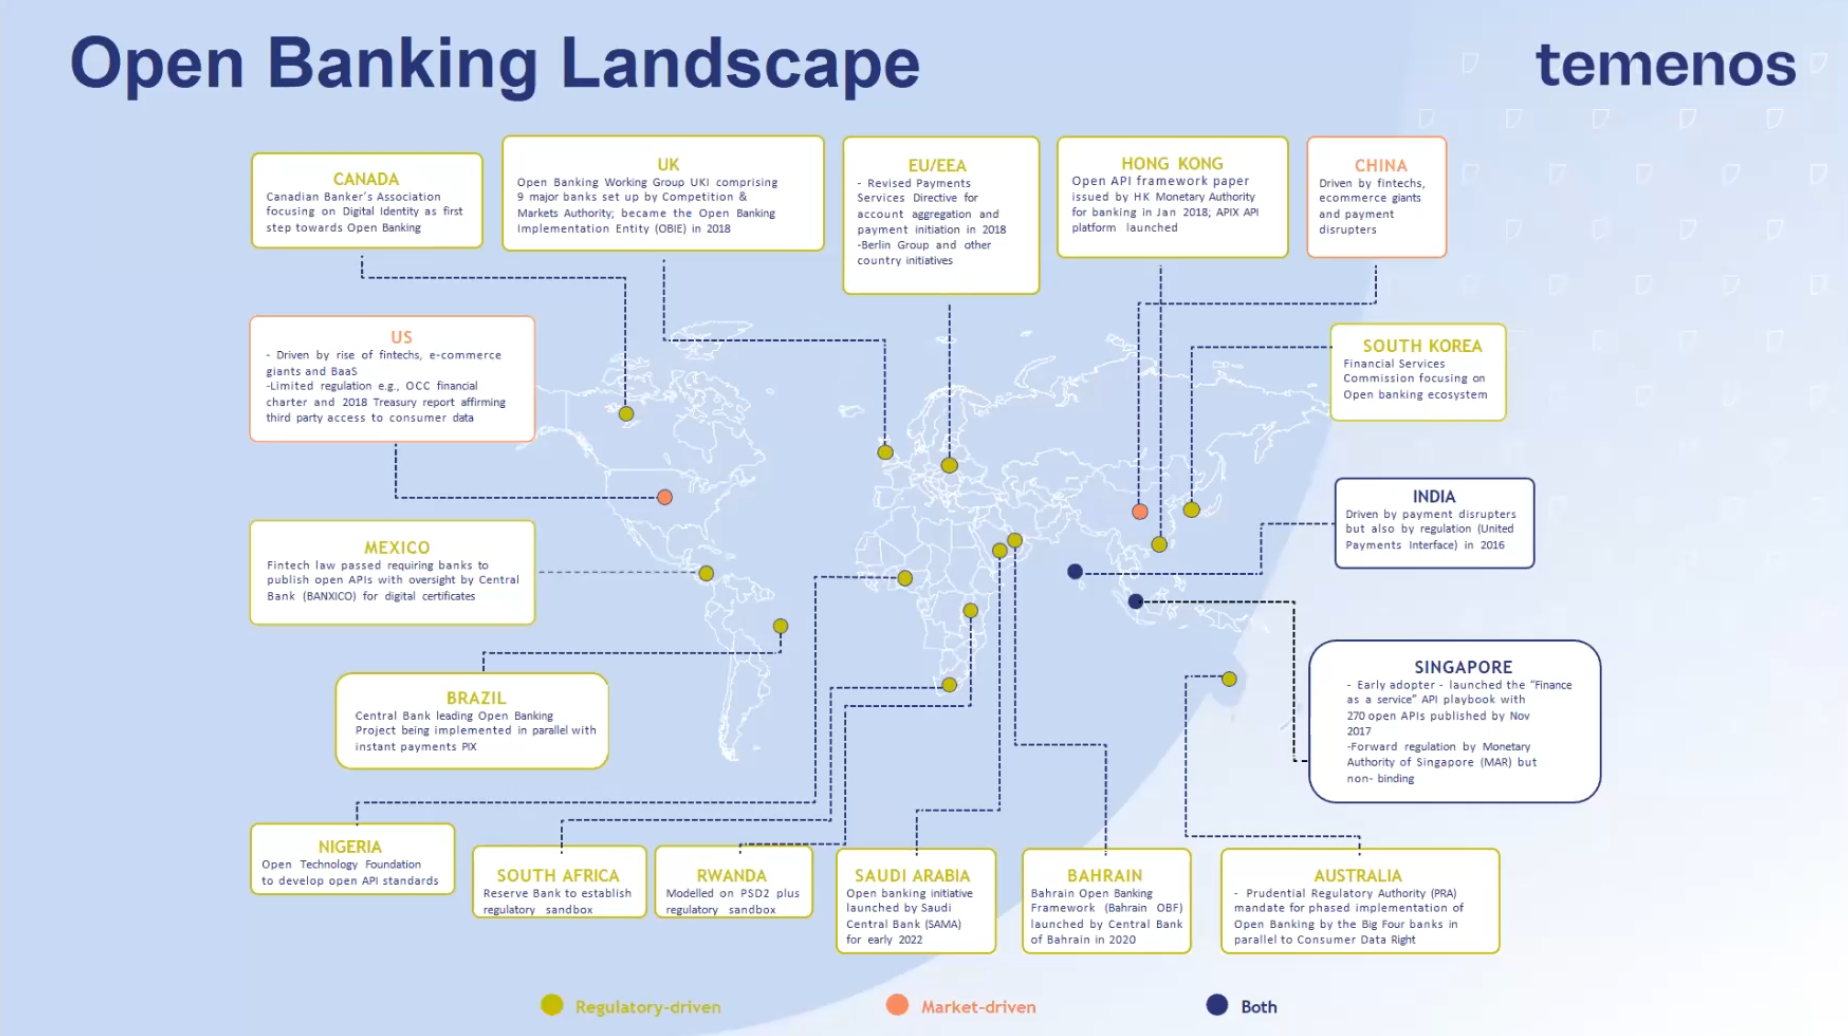 Open banking in APAC - Landscape